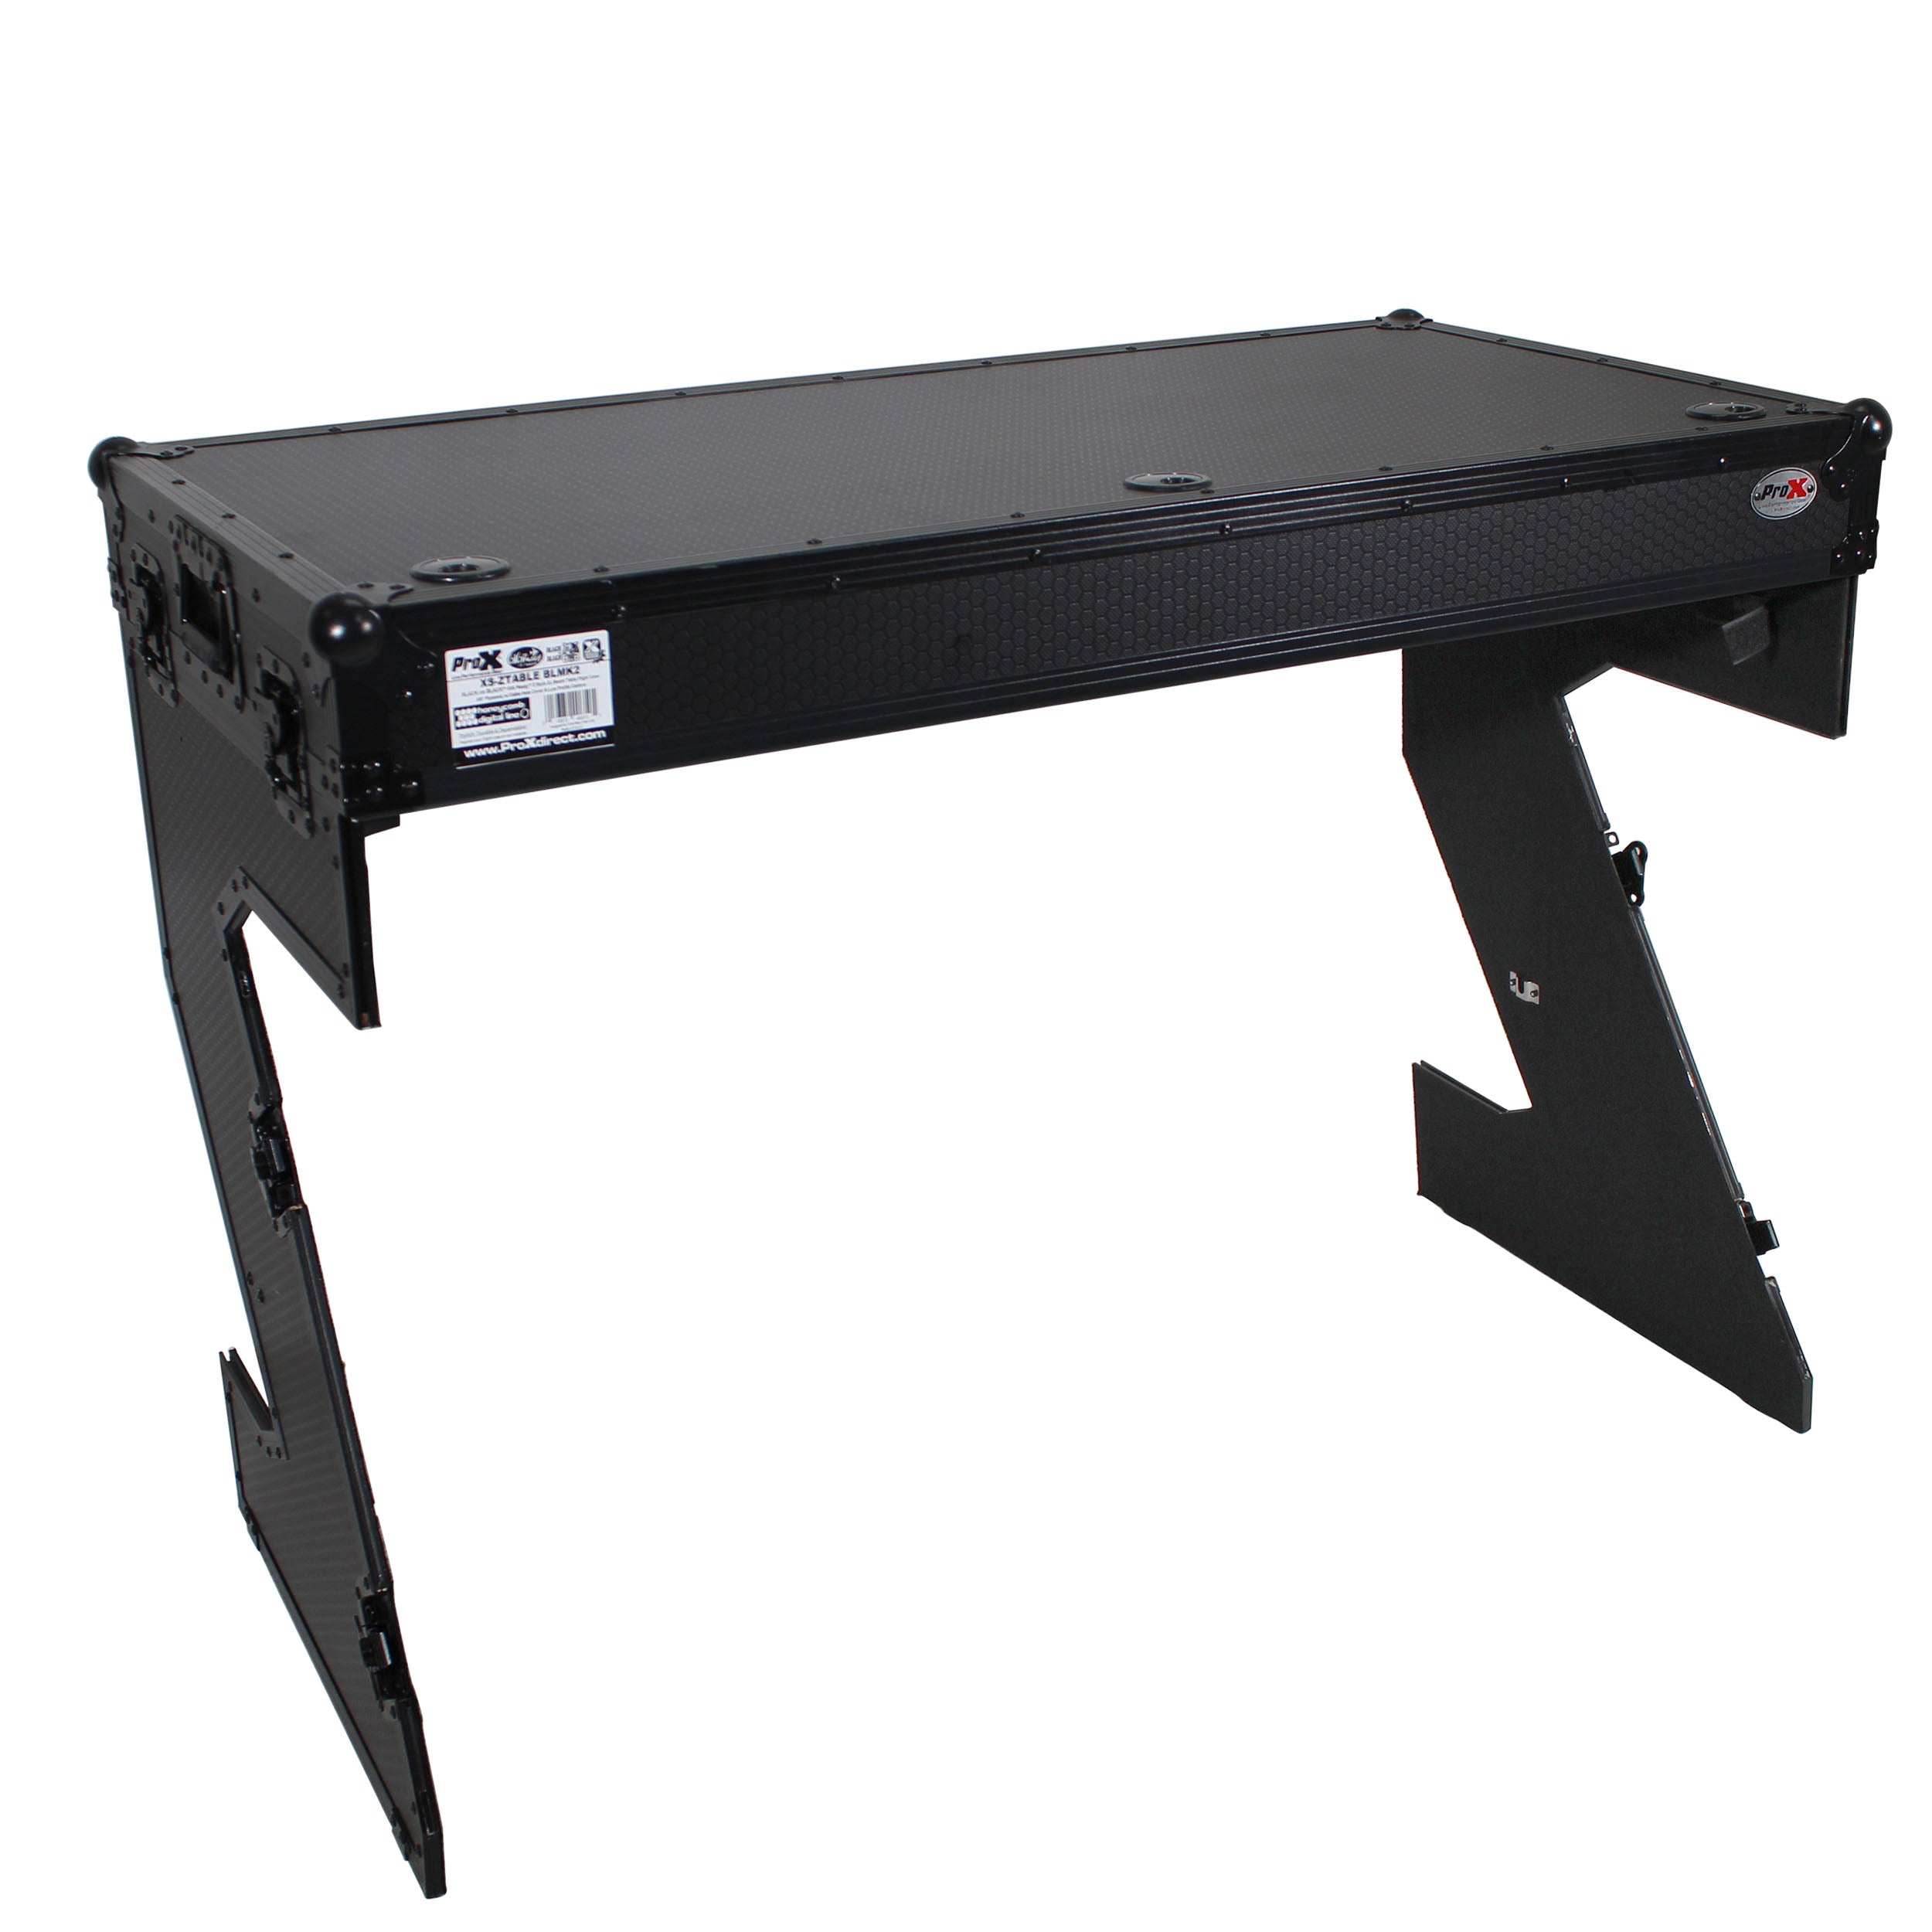 Pro X DJ Z-Table Folding DJ Table Mobile Workstation Flight Case Style with Handles and Wheels - Black Finish XS-ZTABLEBLMK2